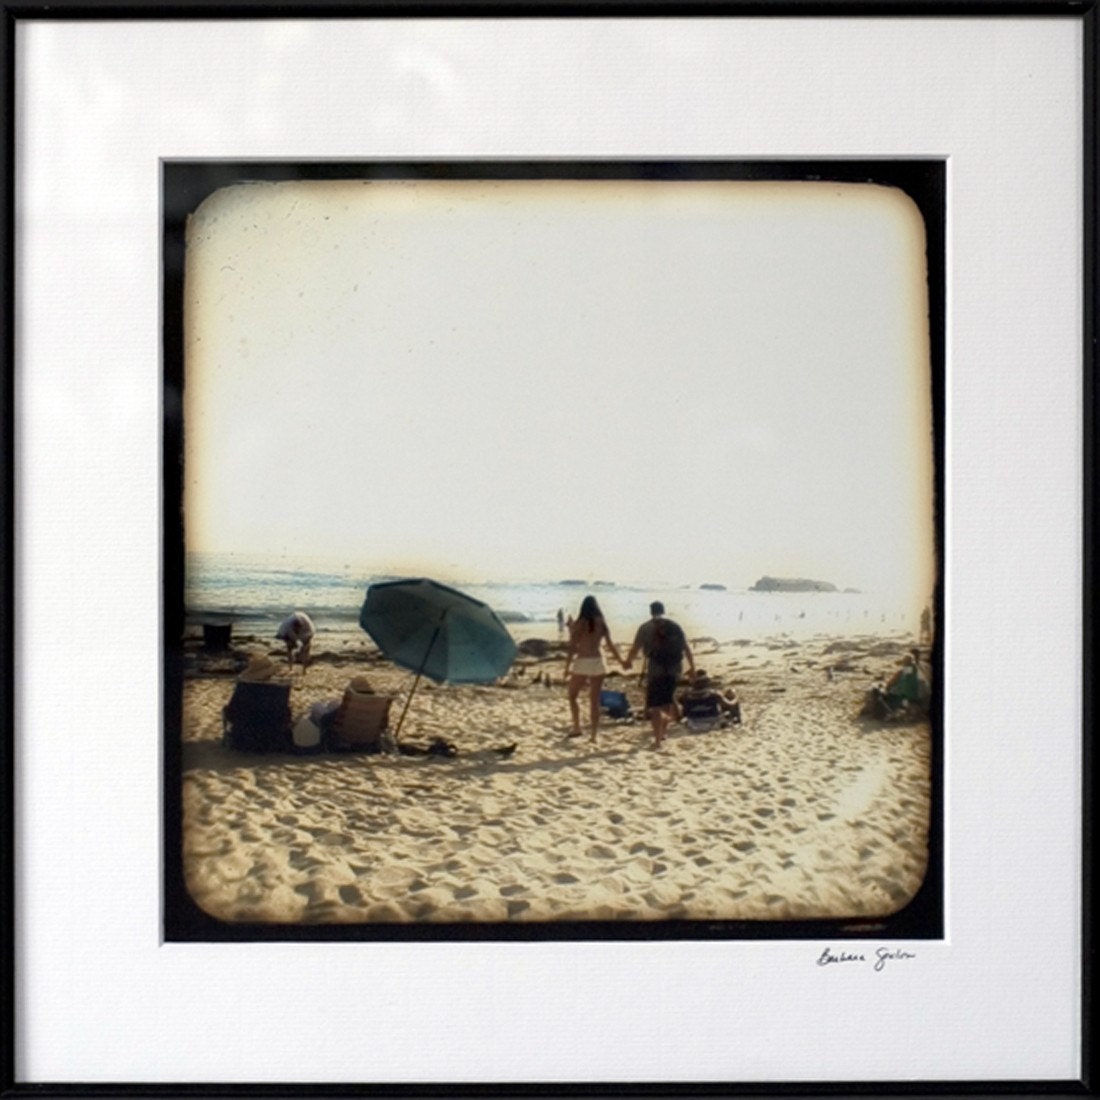 Beach Couple - 8x8 Original Signed Fine Art Photograph Framed - FREE U.S. SHIPPING